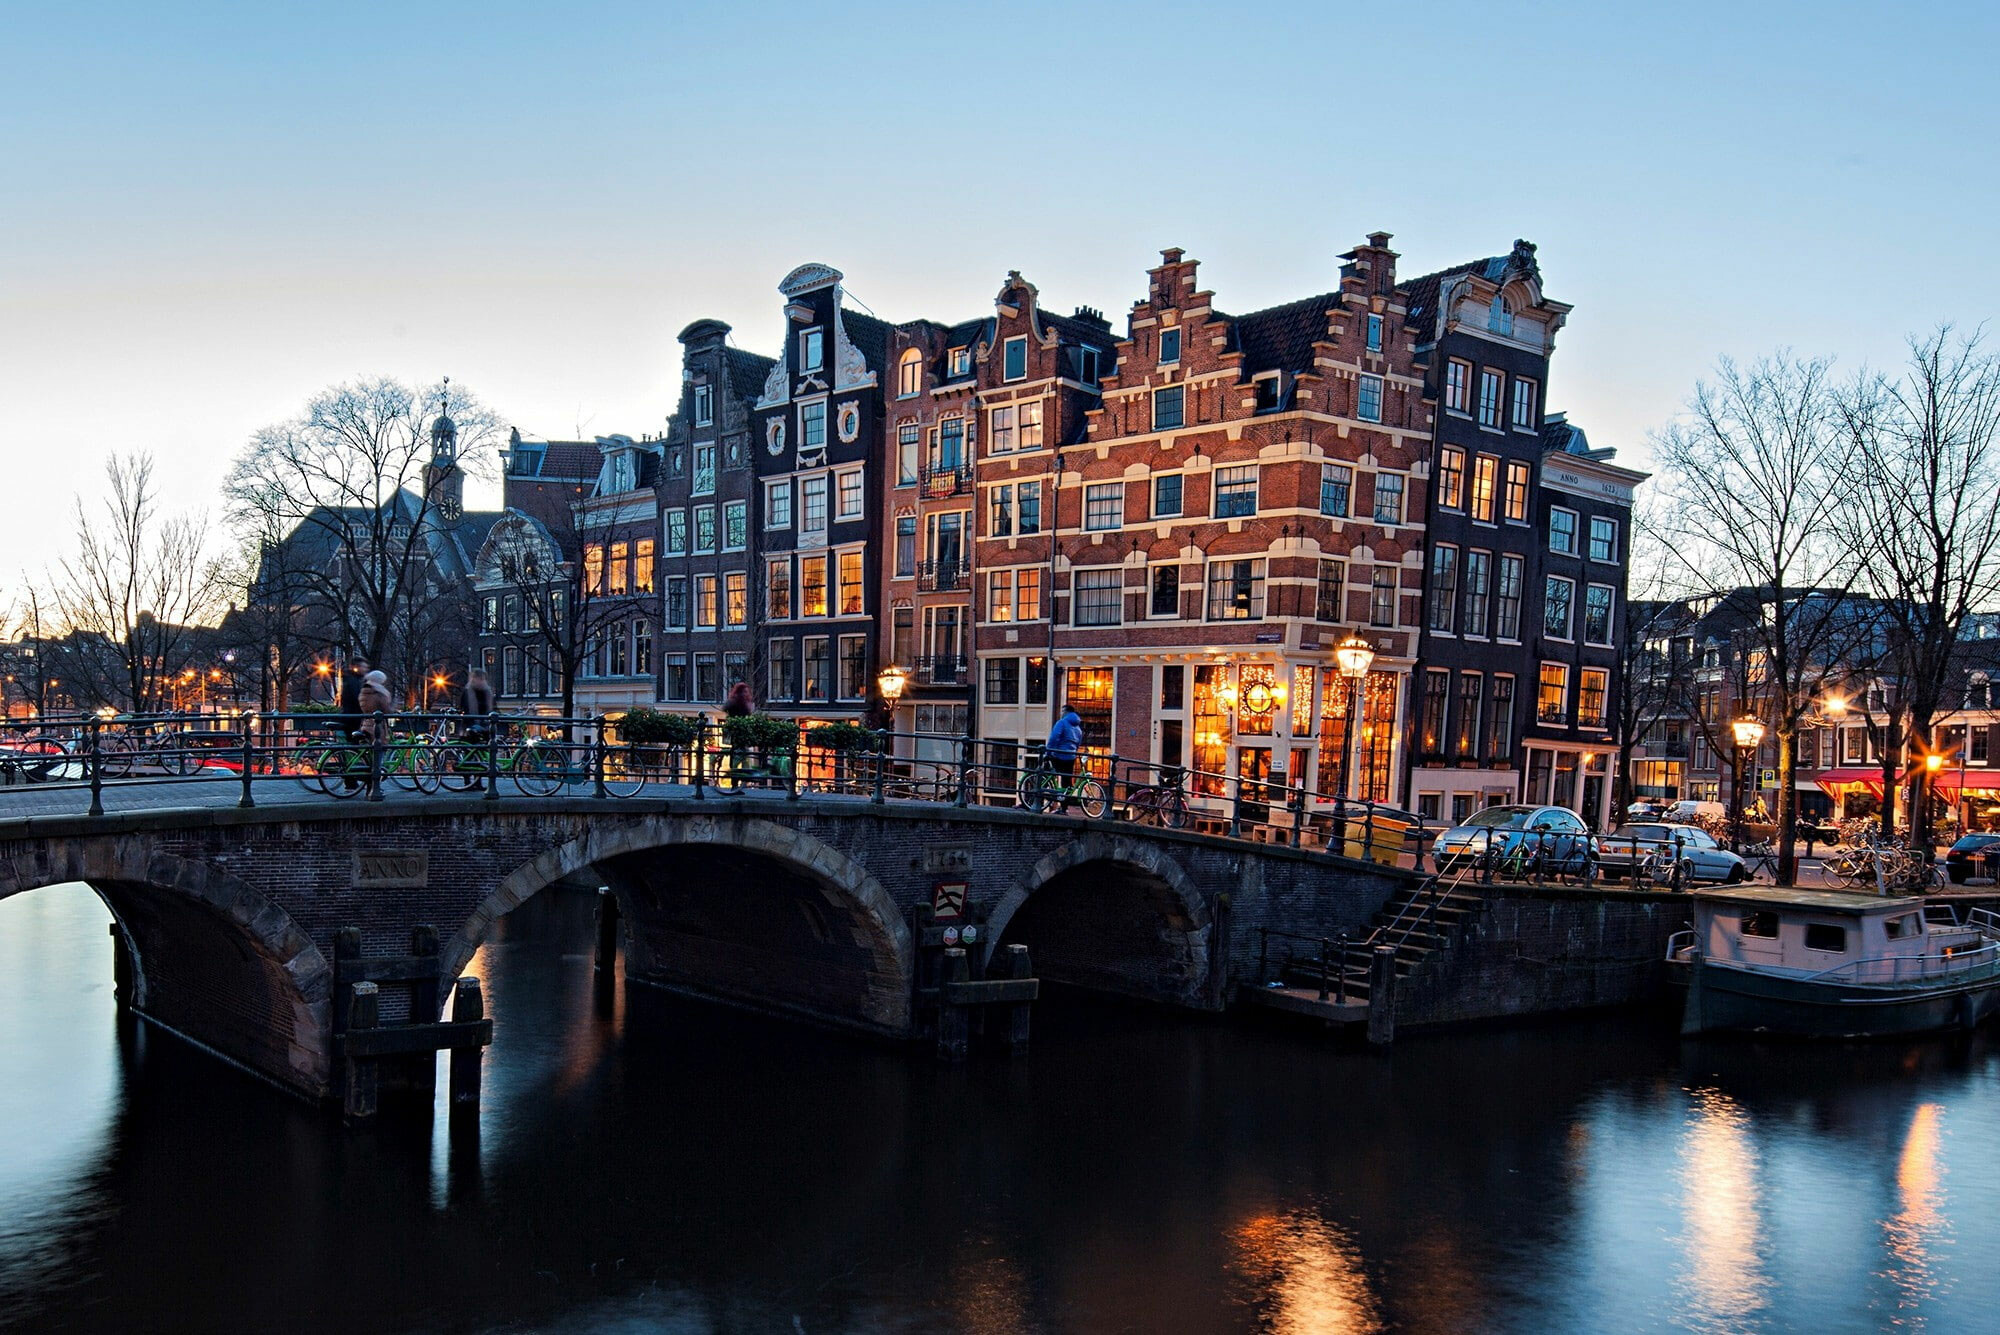 Netherlands: Torensluis, An arch bridge over the canal, Amsterdam. 2000x1340 HD Wallpaper.